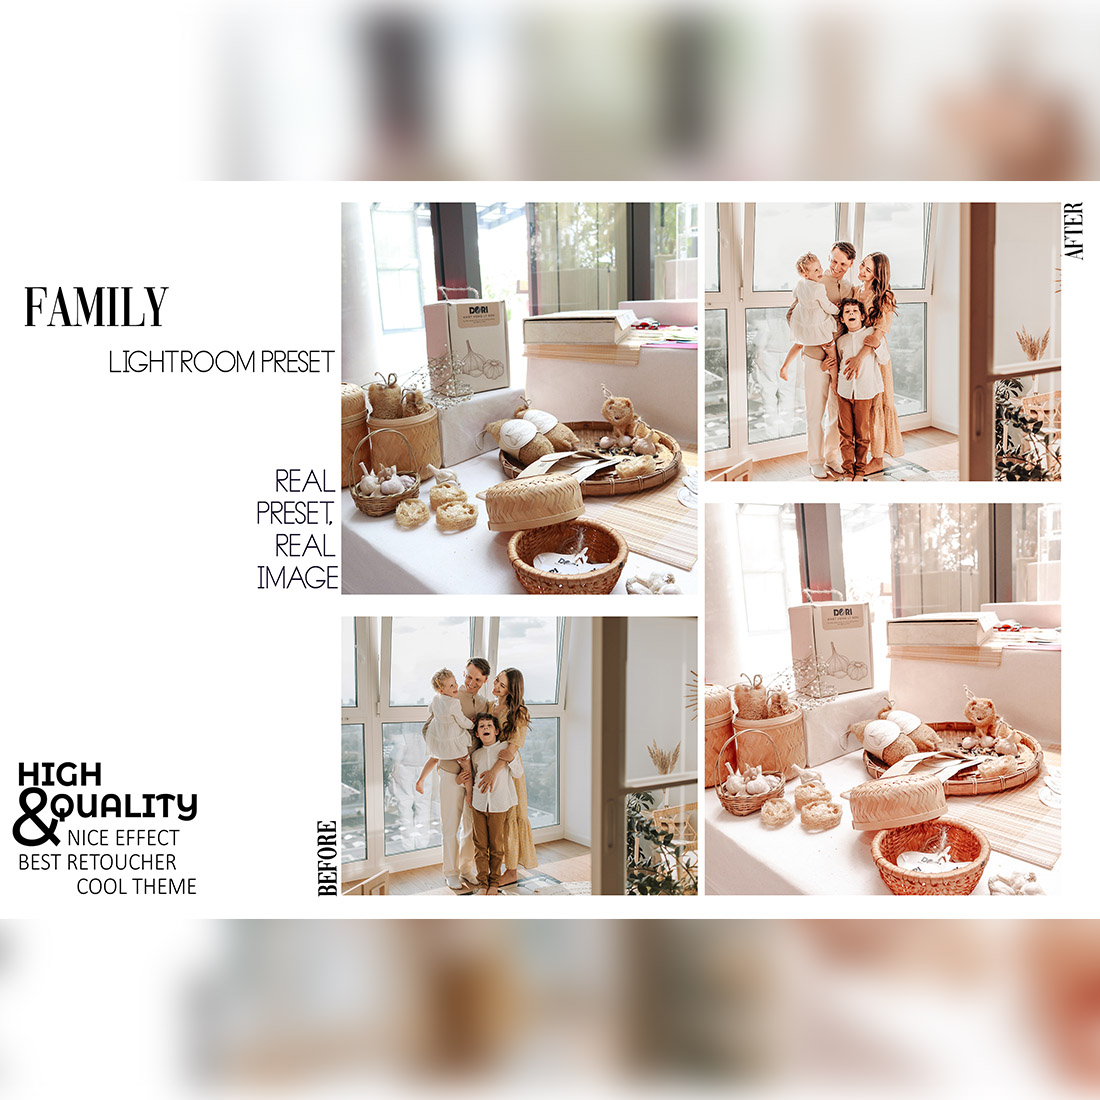 12 Cozy Home Lightroom Presets, Family Time Mobile Preset, Warm Indoor Desktop, Lifestyle Portrait Theme For Instagram LR Filter DNG Autumn preview image.